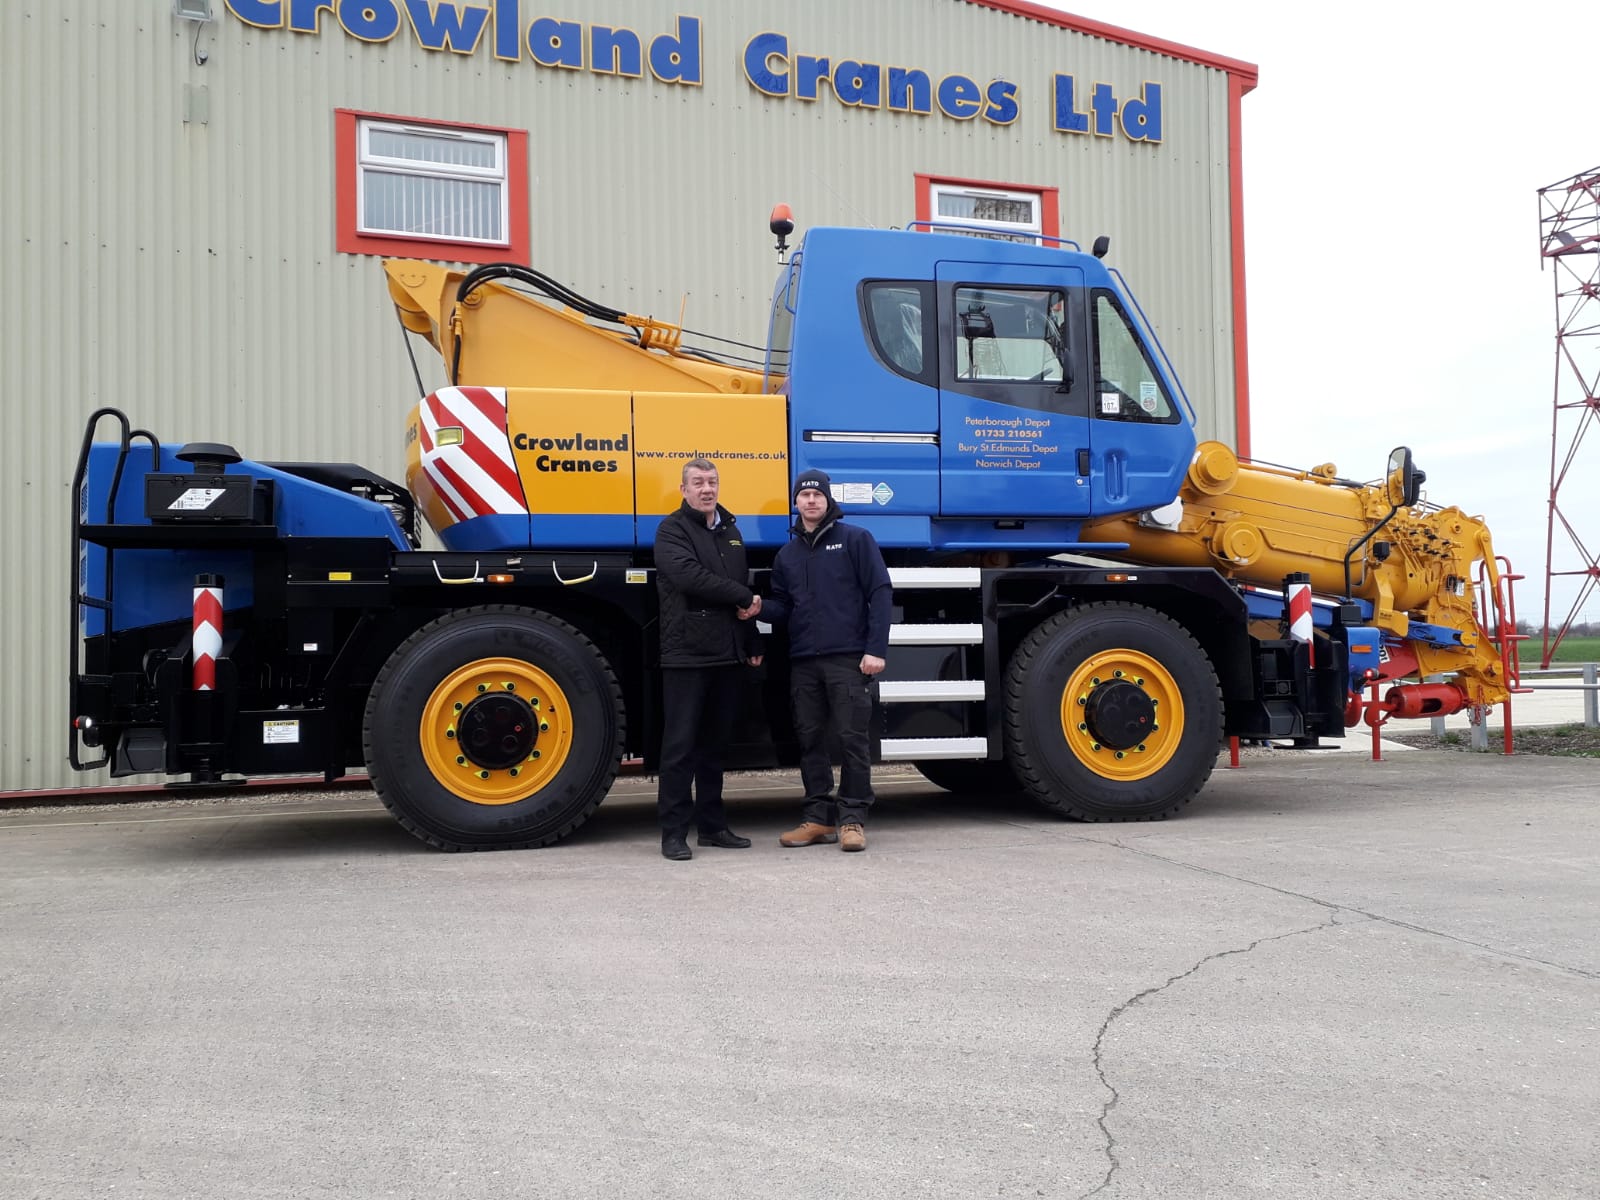 Paul Bishop of Crowland Cranes (L) and Gintaras Juodis of Rivertek Services